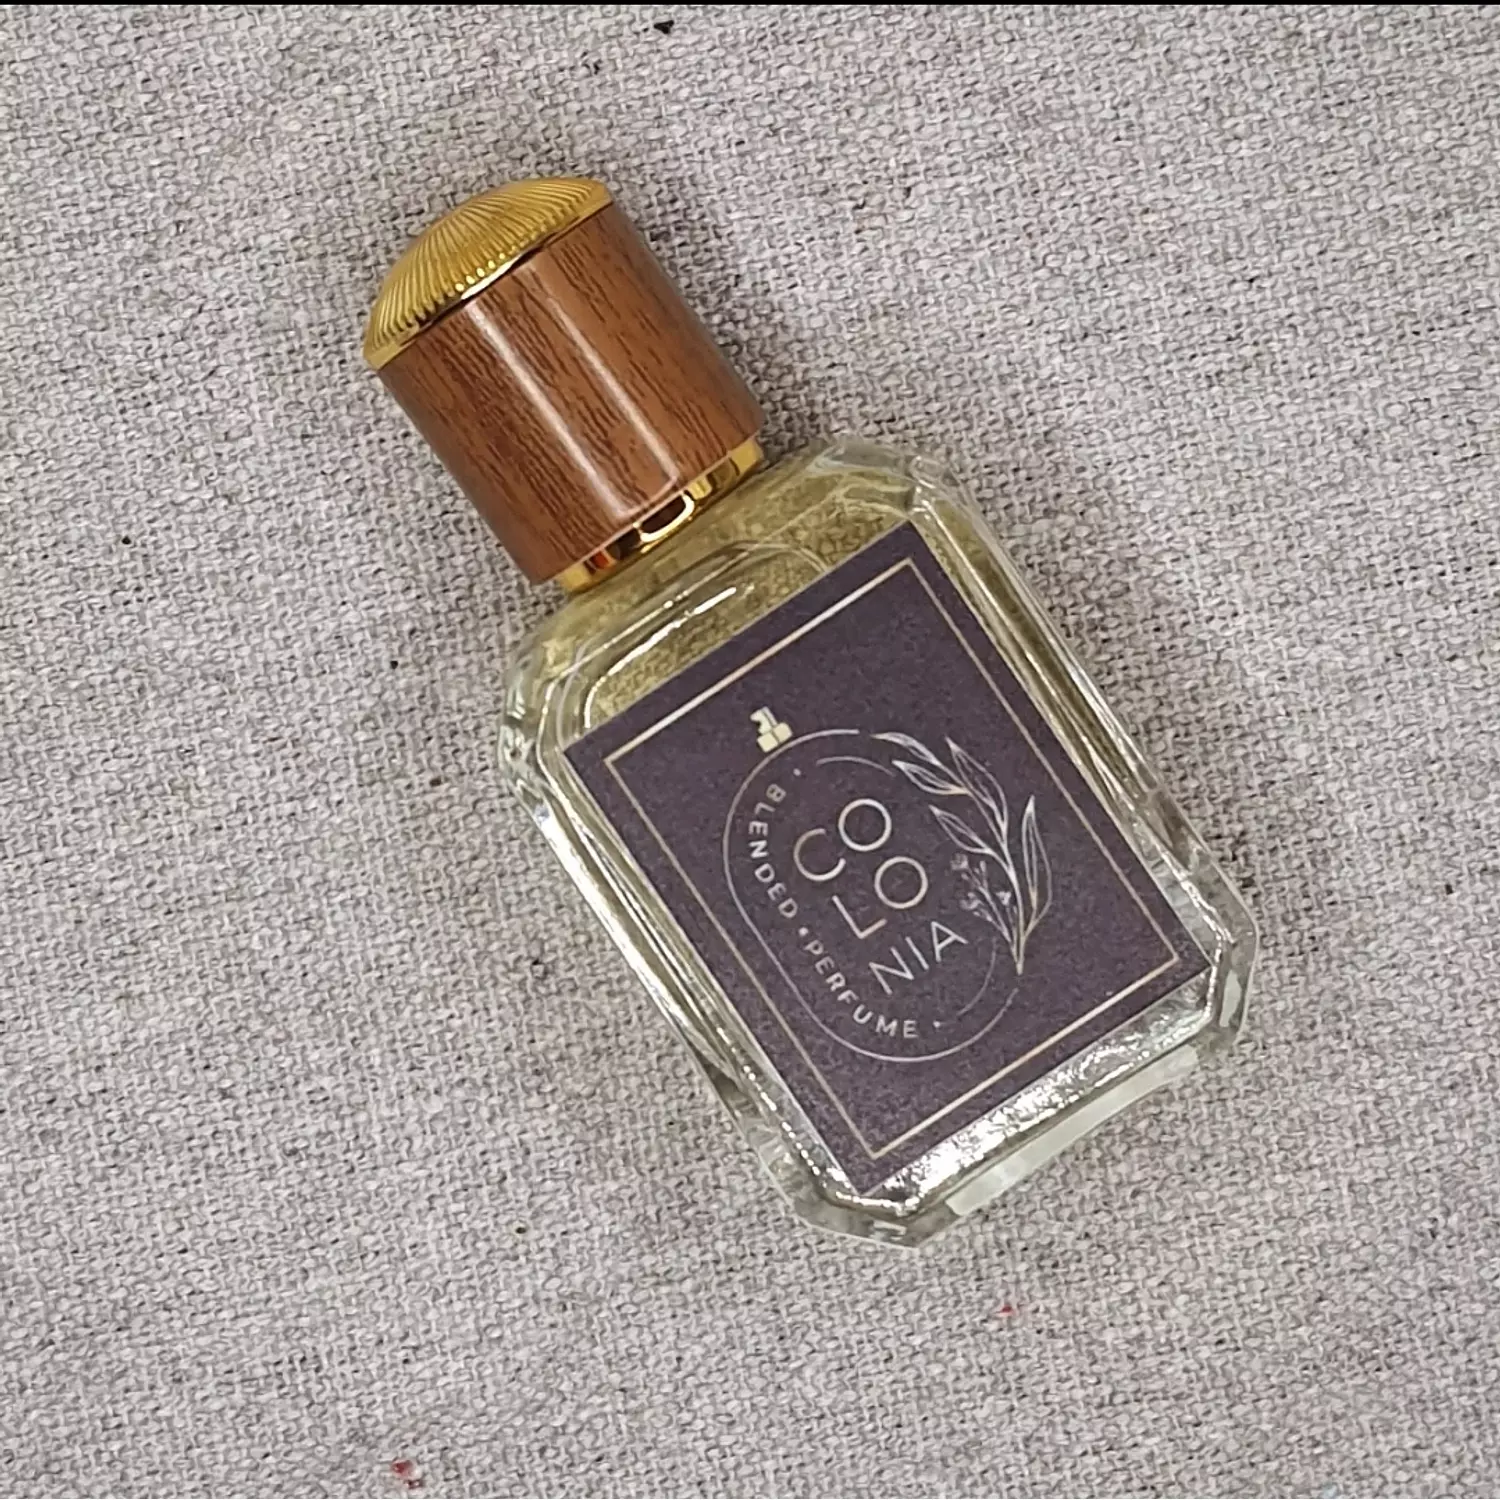 Atomic Rose Initio Parfums Prives (أتوميك روز - إنيشيو) عطر للجنسين 1